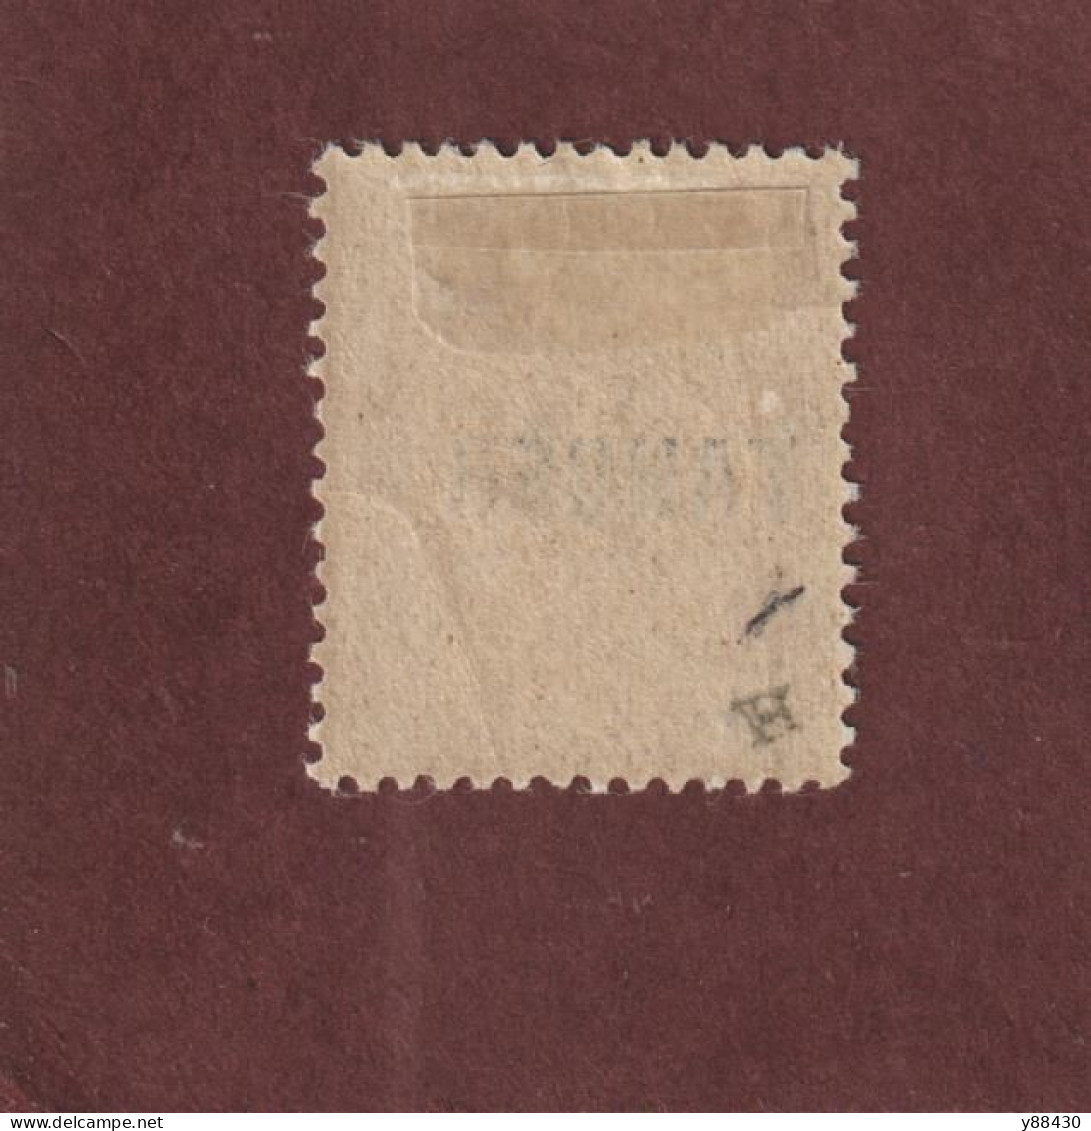 MAROC - TANGER - 88 De 1918/24 - Neuf * - 20c. Brun / Lilas - 2 Scan - Unused Stamps